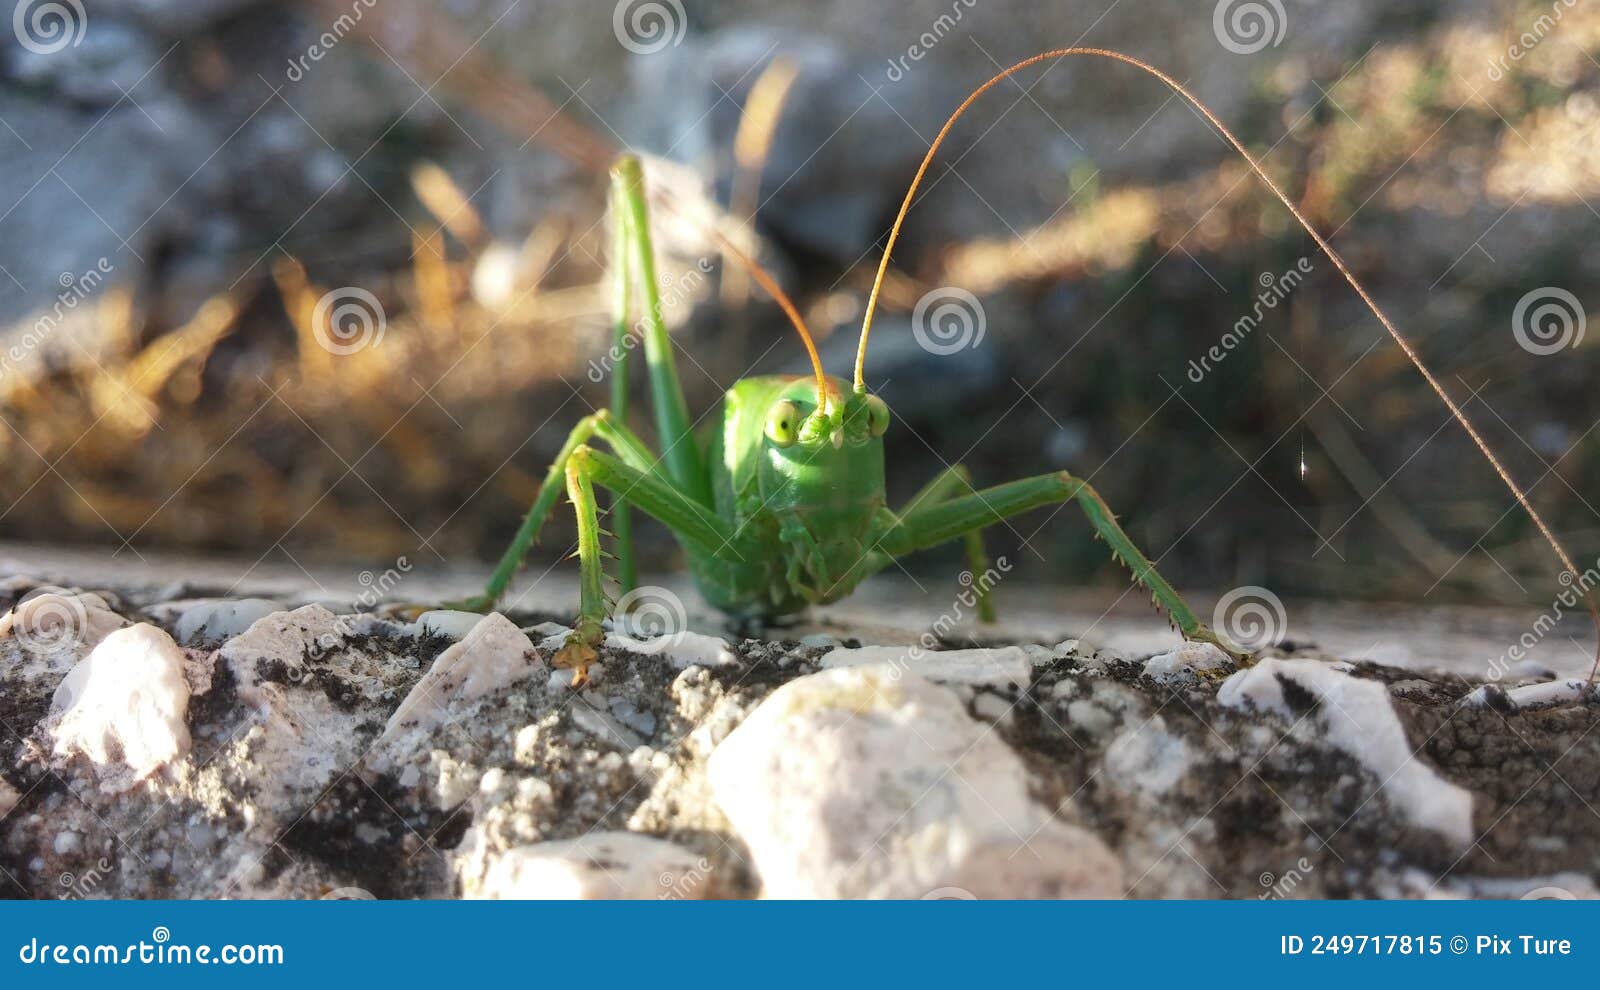 big green locust for zoom